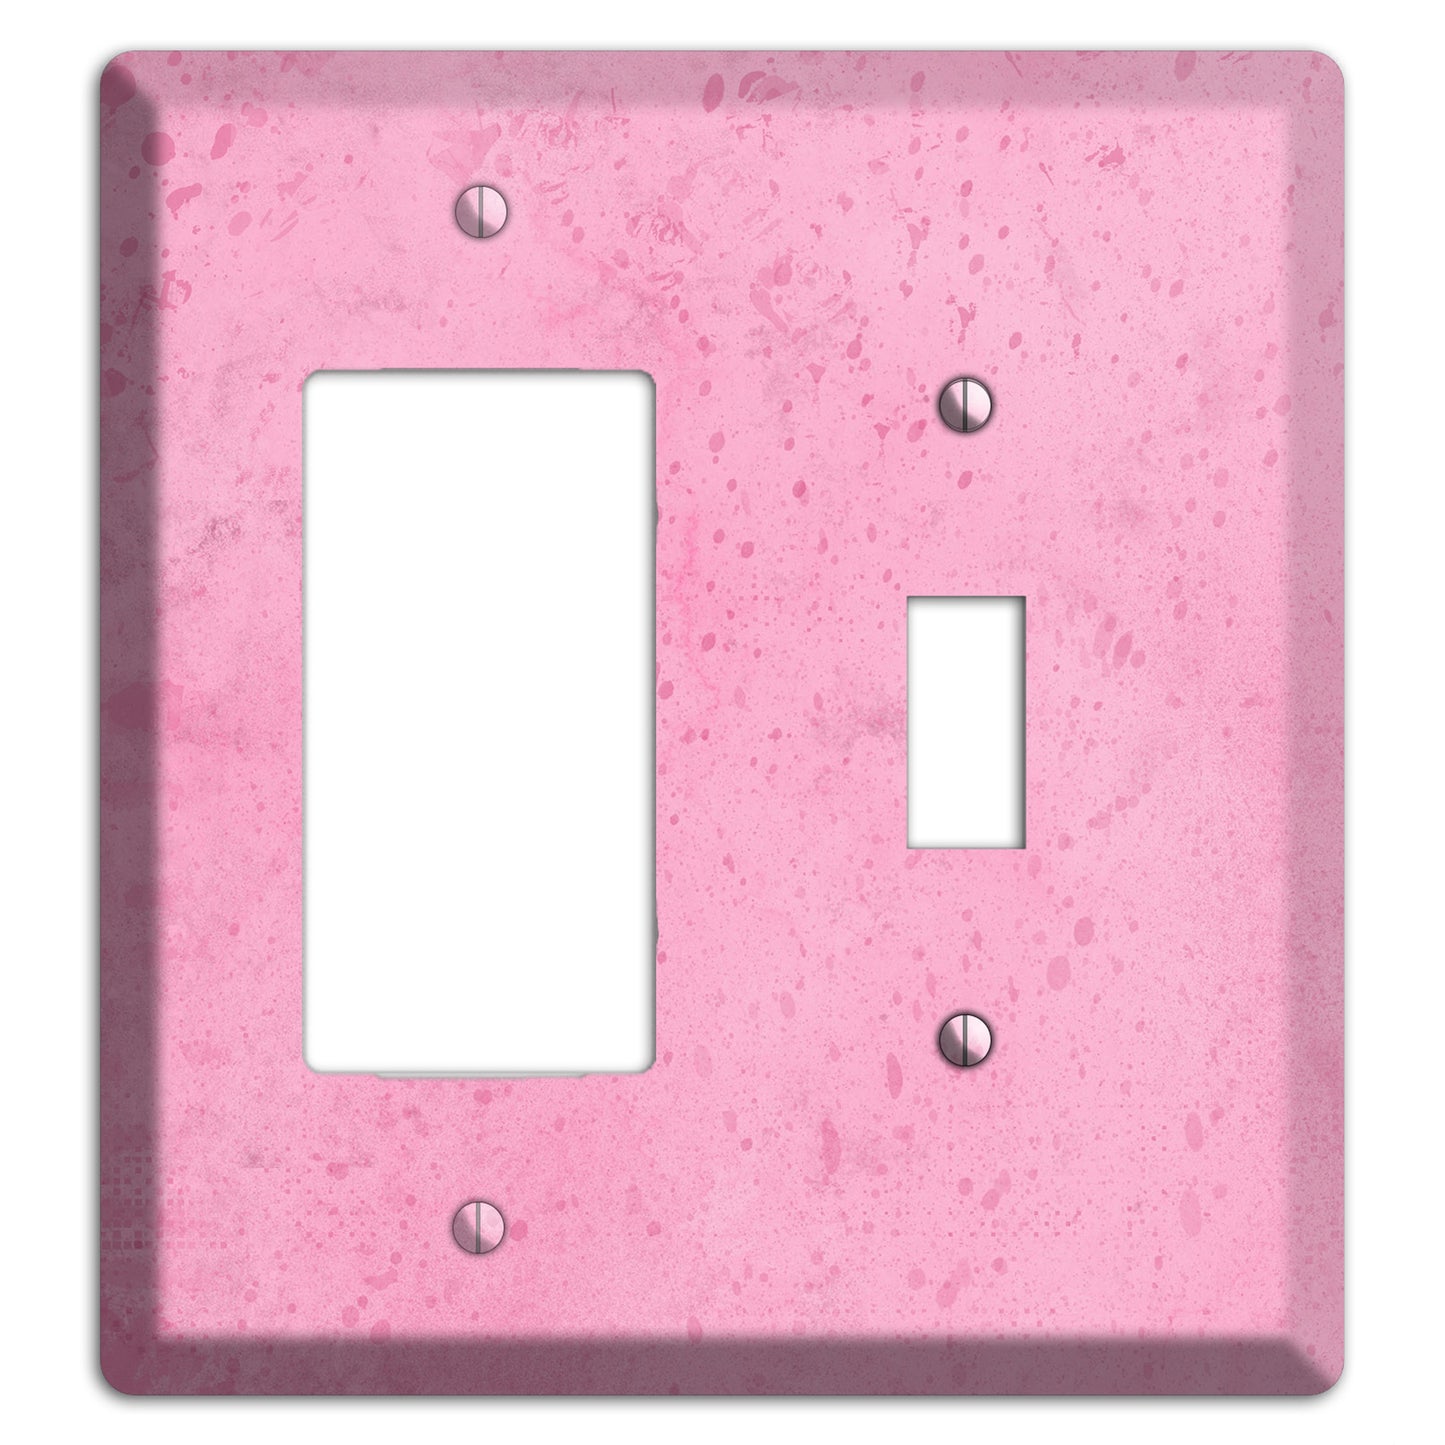 Illusion Pink Texture Rocker / Toggle Wallplate